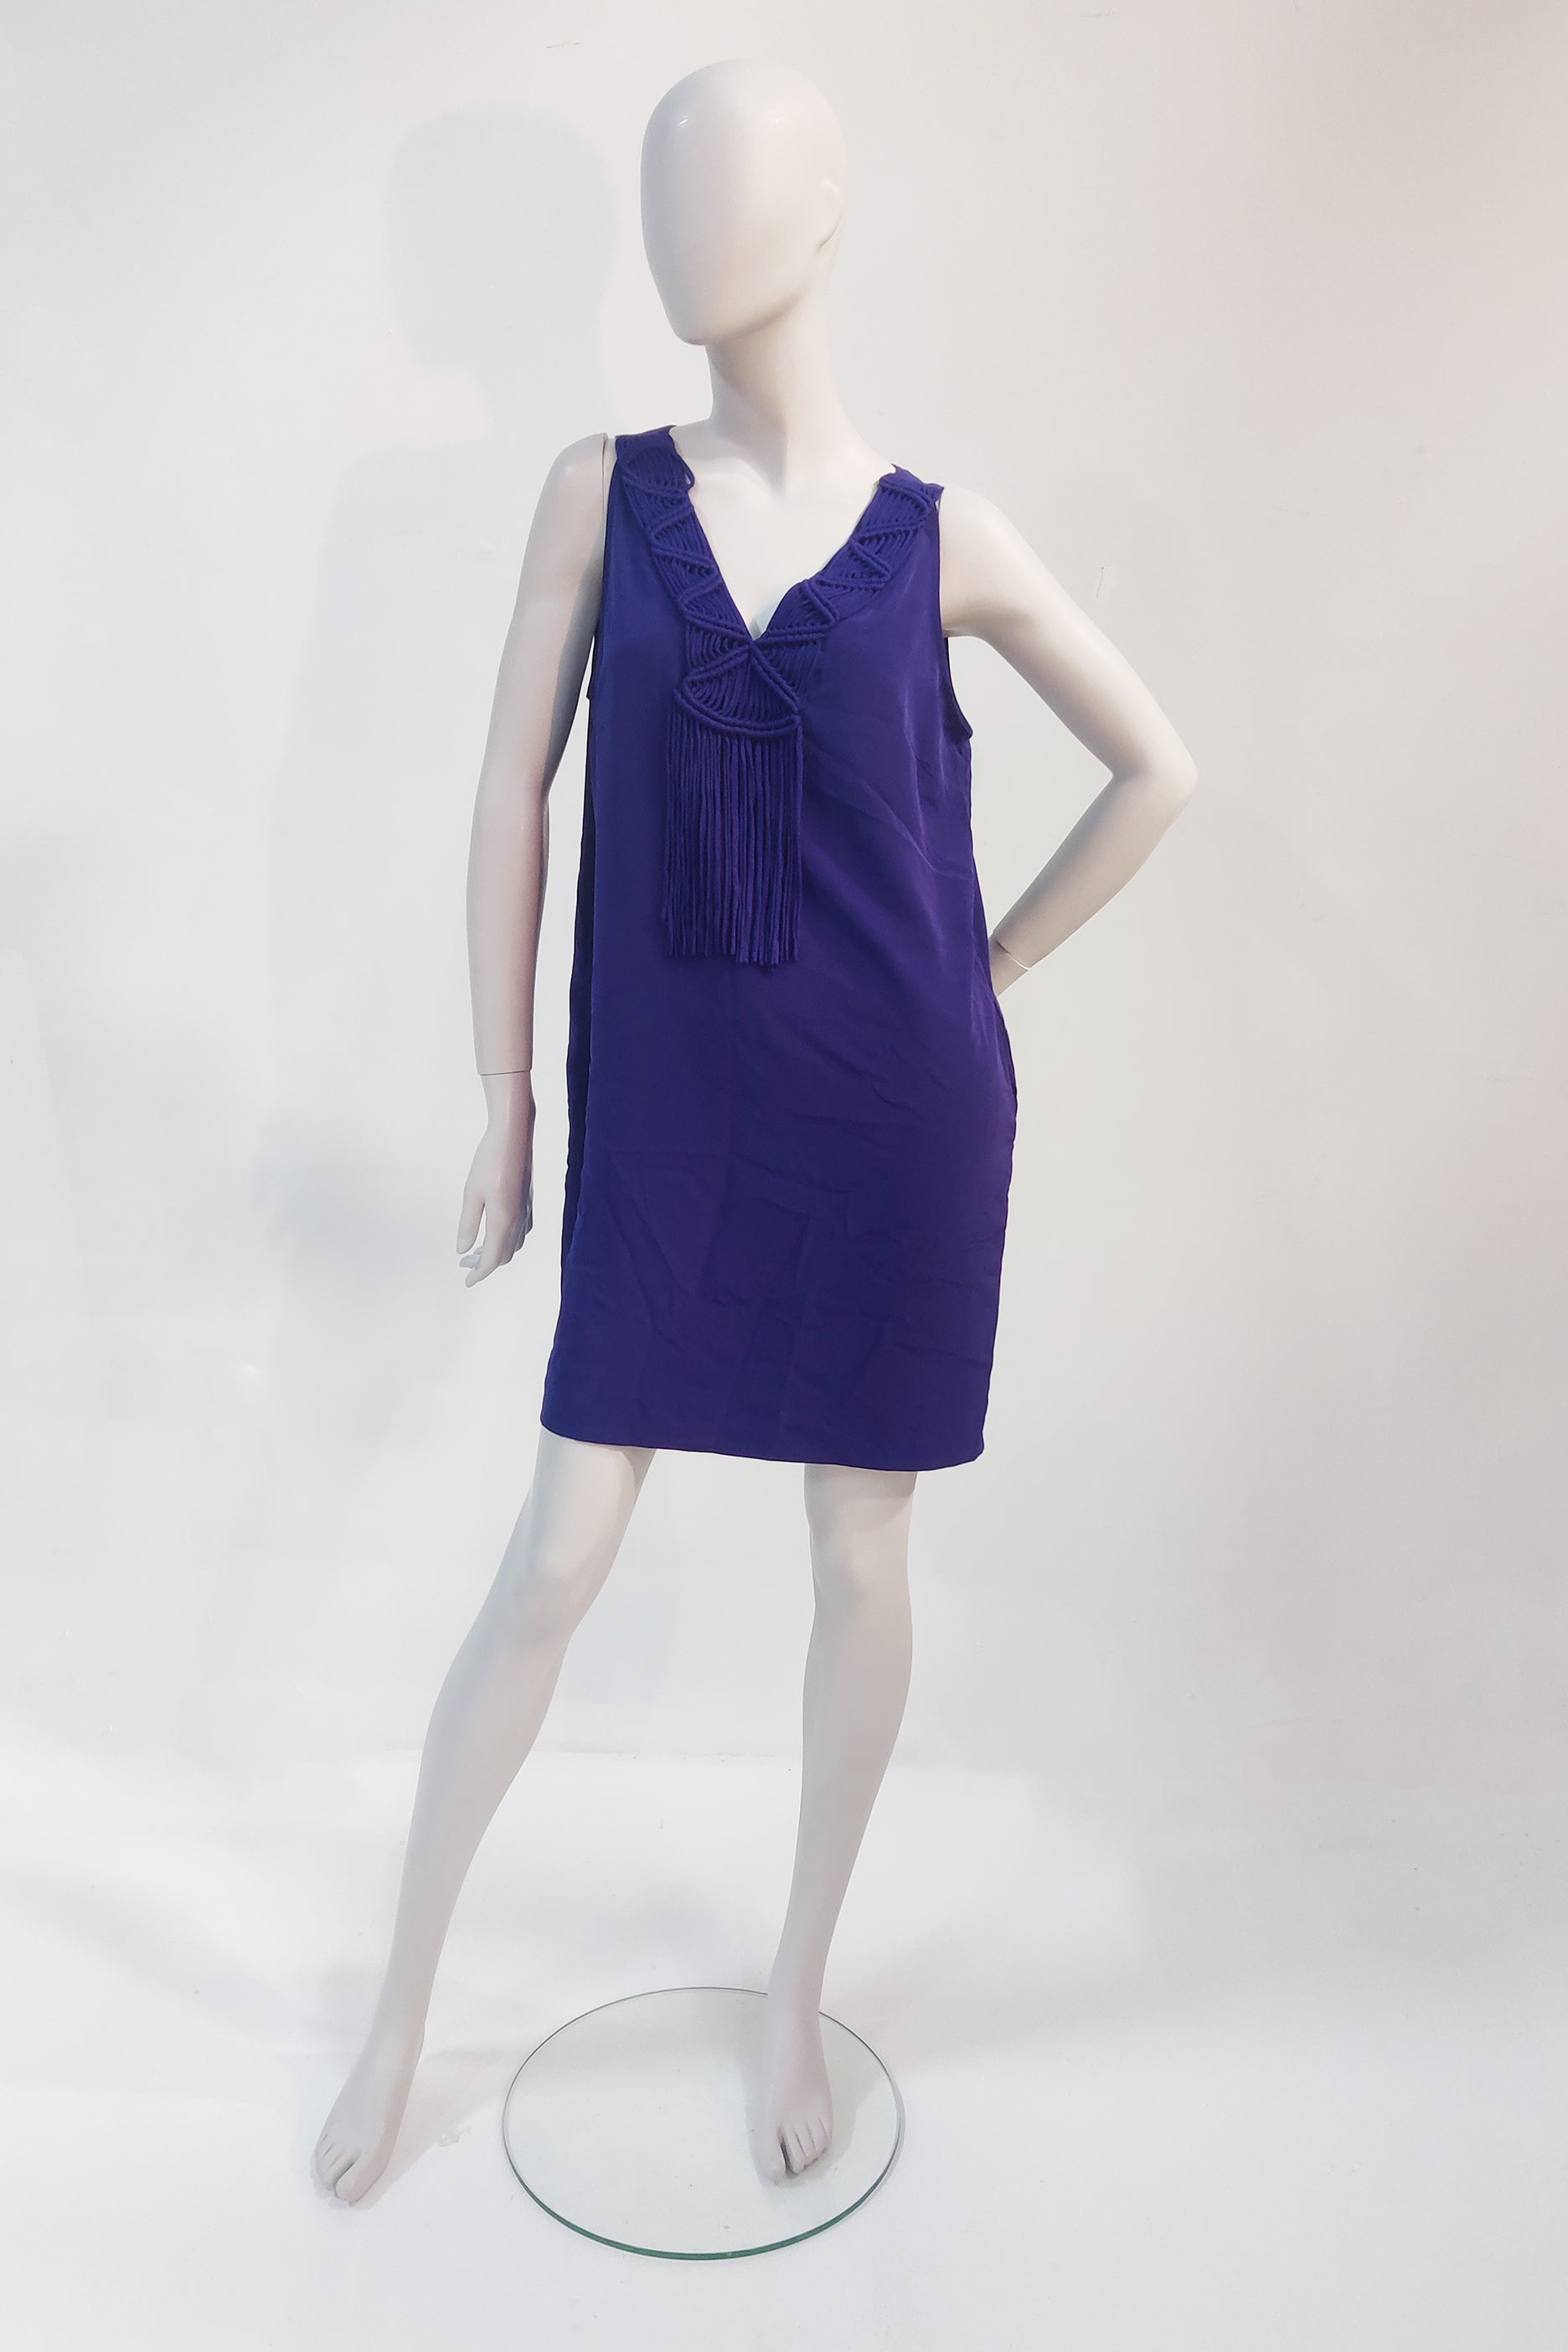 Zara Sleeveless Purple Dress (L)